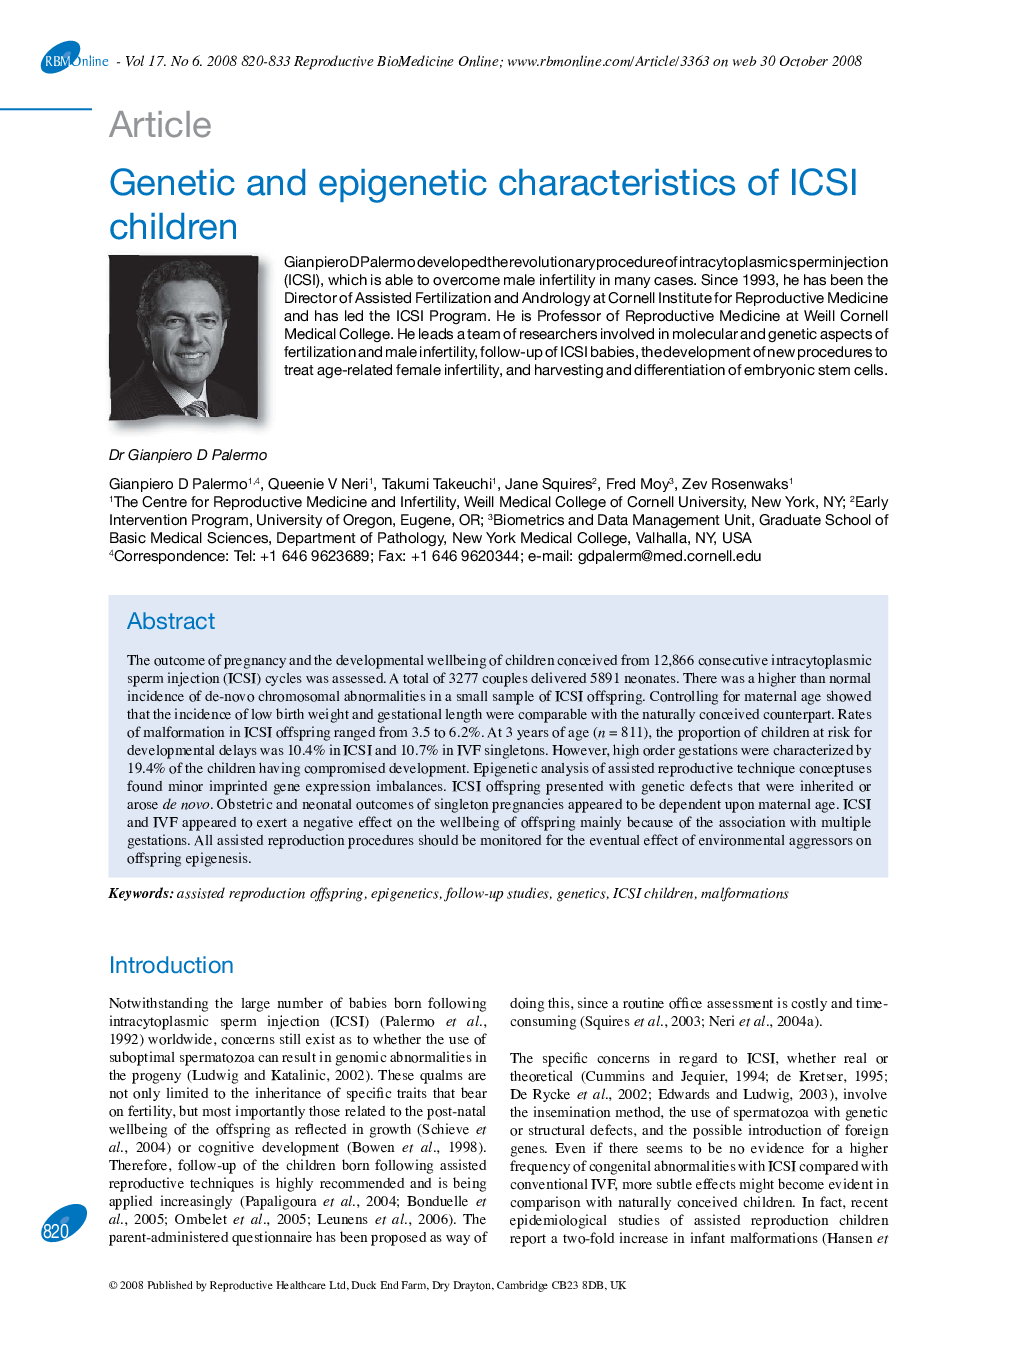 Genetic and epigenetic characteristics of ICSI children 